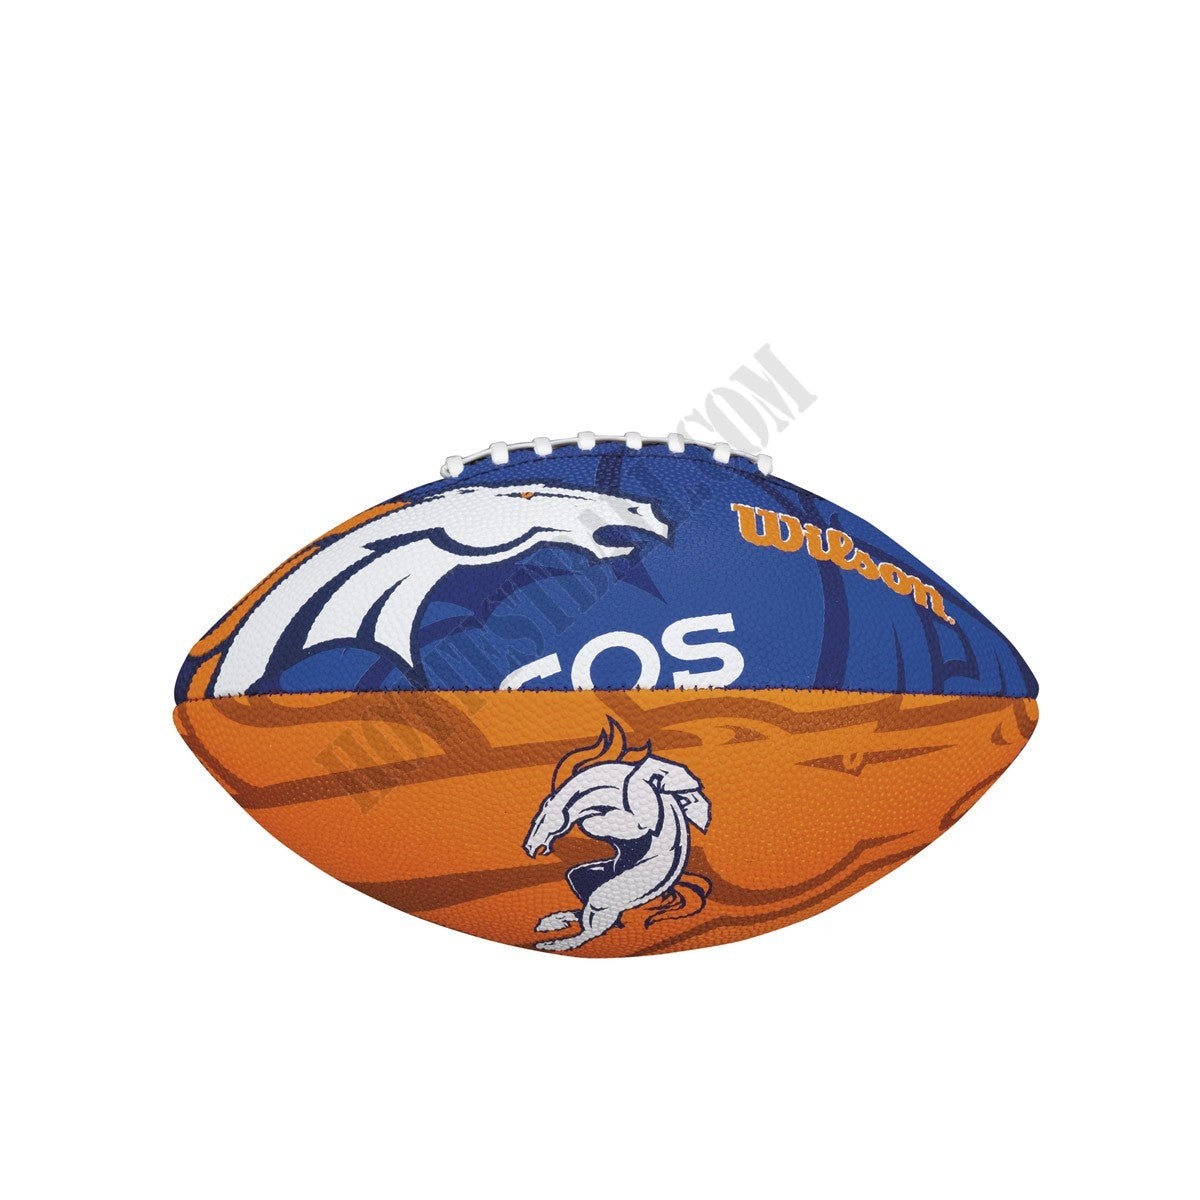 NFL Team Tailgate Football - Denver Broncos ● Wilson Promotions - NFL Team Tailgate Football - Denver Broncos ● Wilson Promotions